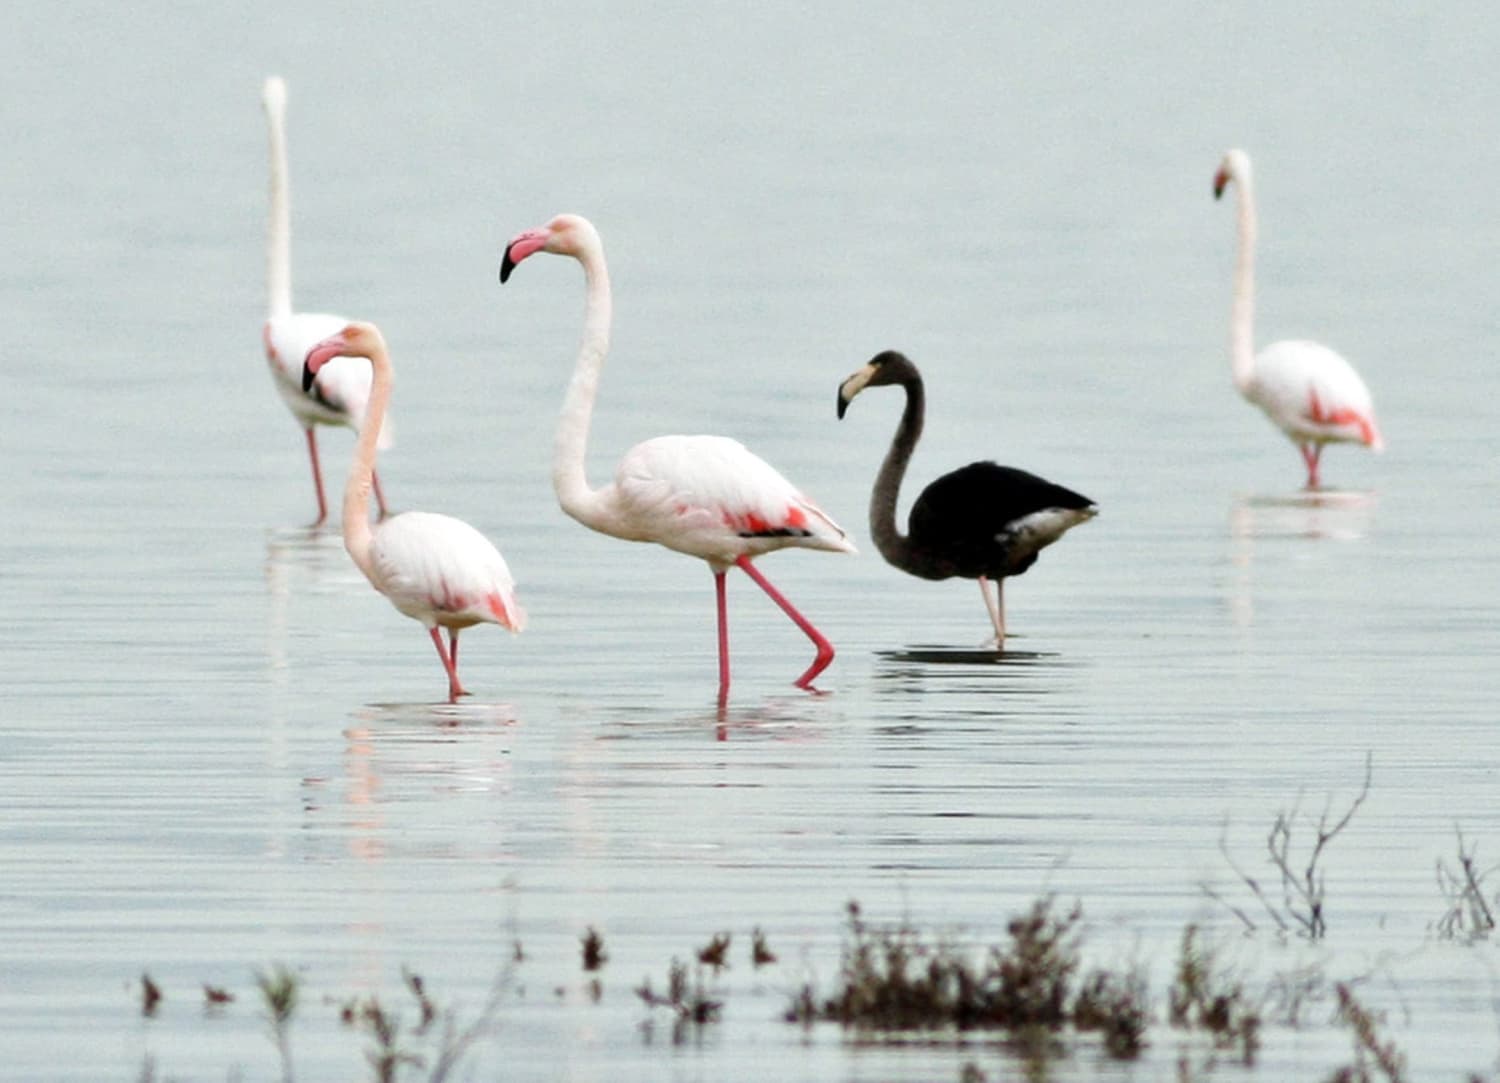 Rare Black Flamingo Ruffles Feathers in Cyprus - NBC News2150 x 1552